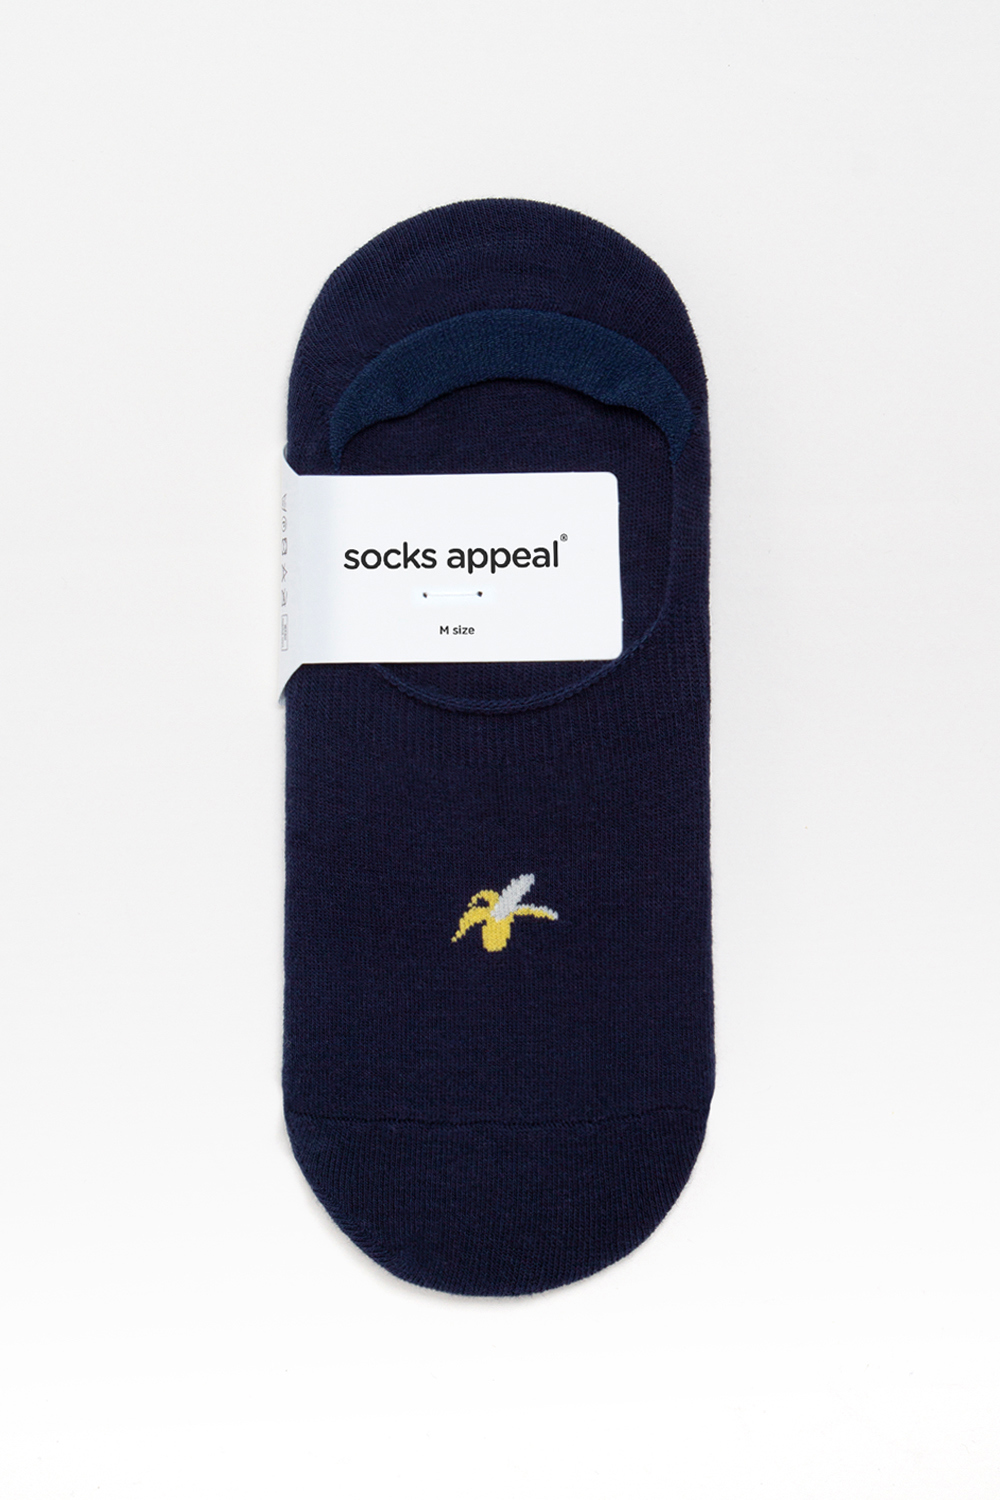 socks charcoal color image-S3L1